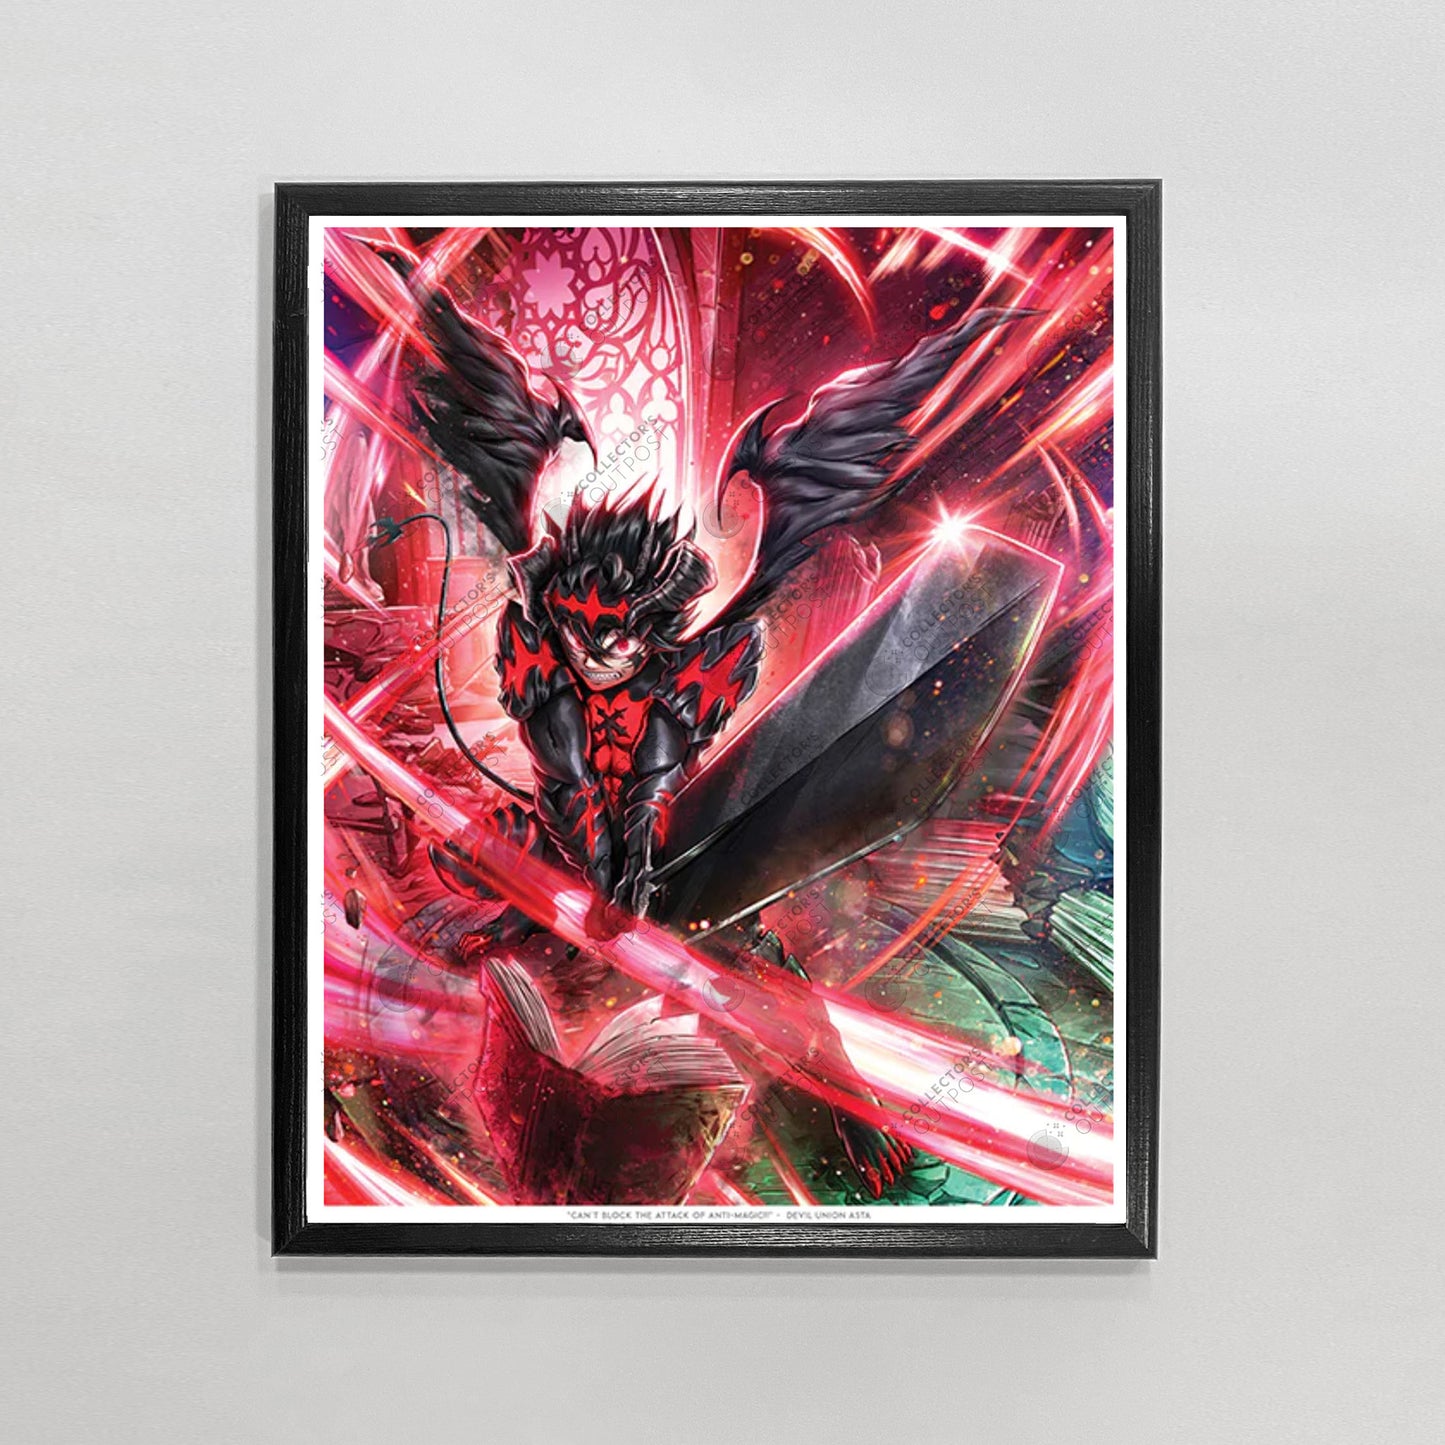 Devil Union Asta "Dark Powers For Good"(Black Clover) Premium Art Print